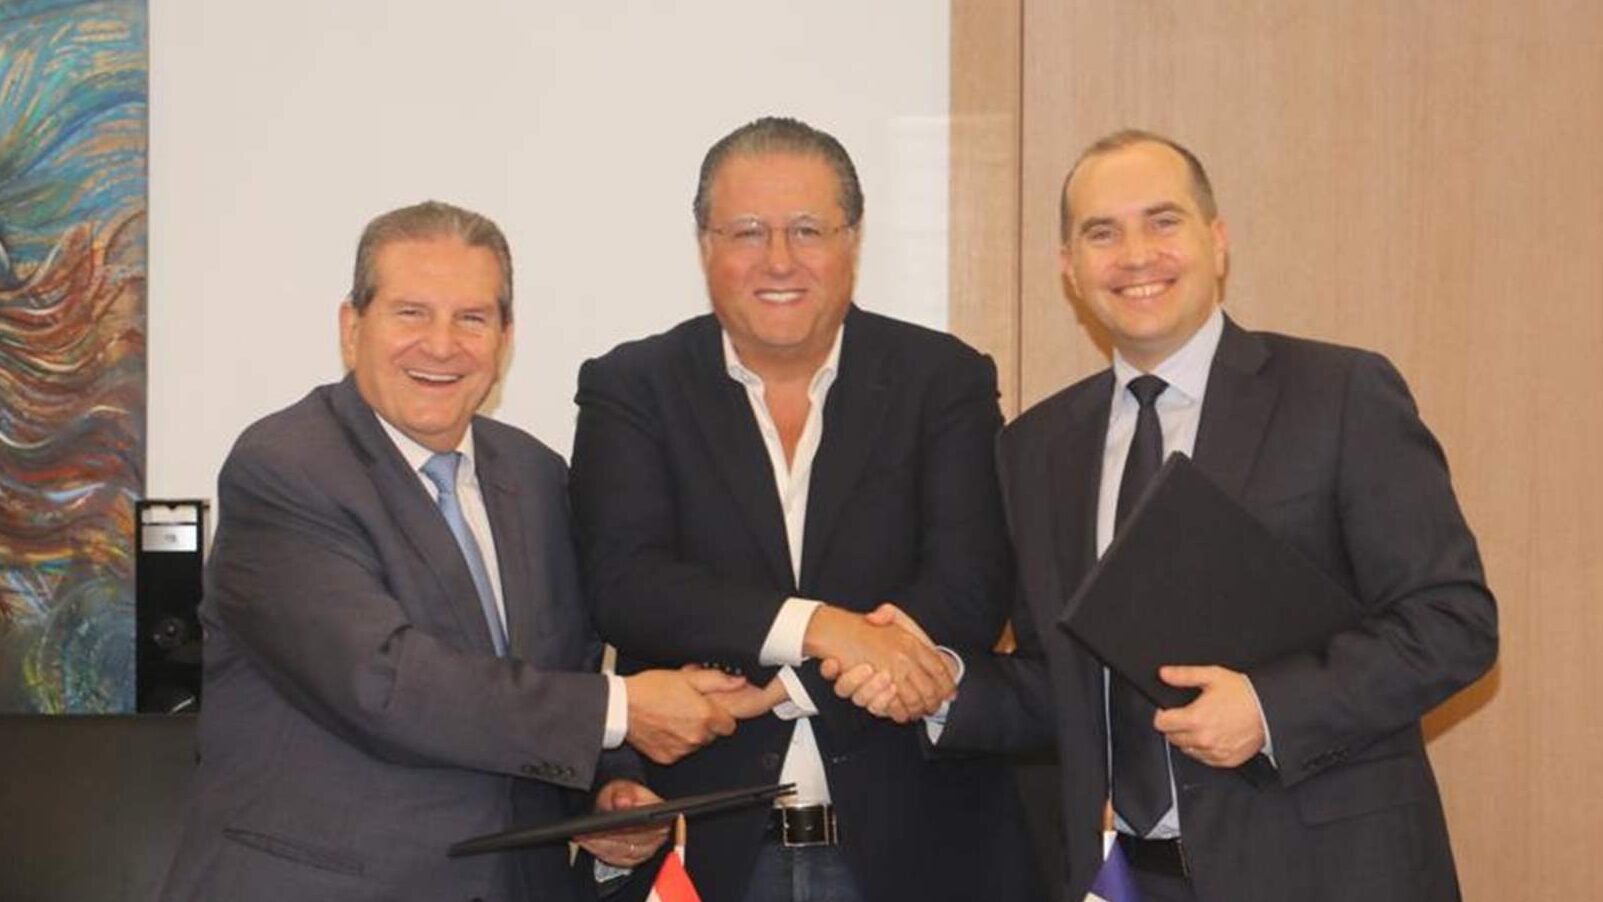 Lebanon, France Ink Commerce Cooperation Agreement To Bolster Investment